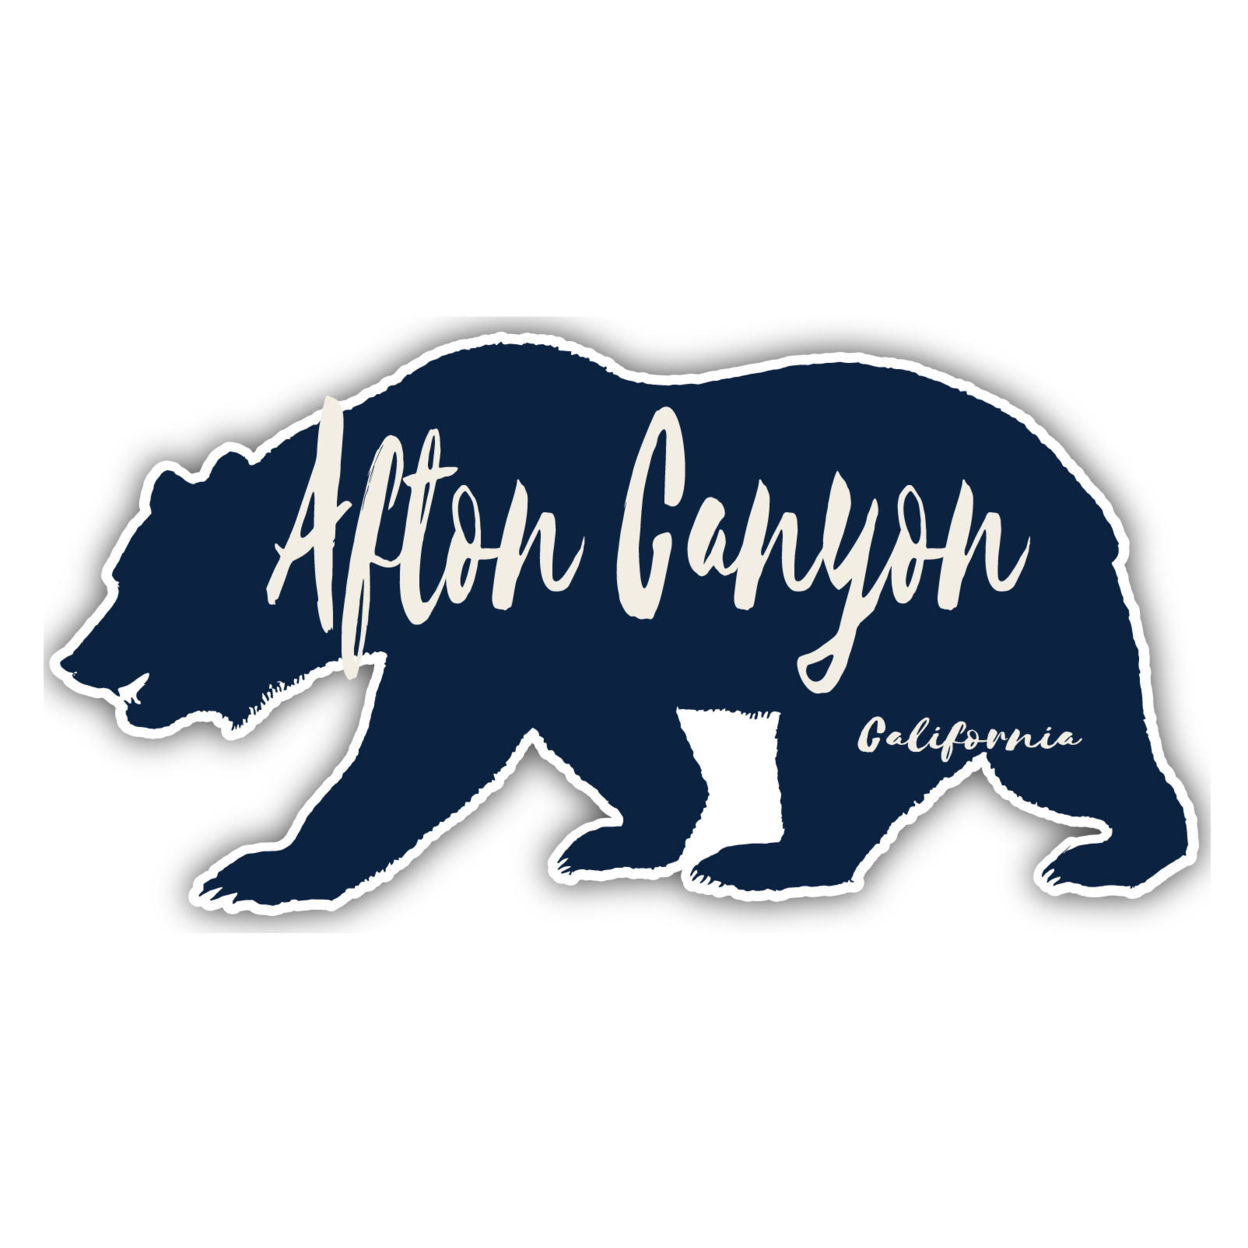 Afton Canyon California Souvenir Decorative Stickers (Choose Theme And Size) - Single Unit, 6-Inch, Bear